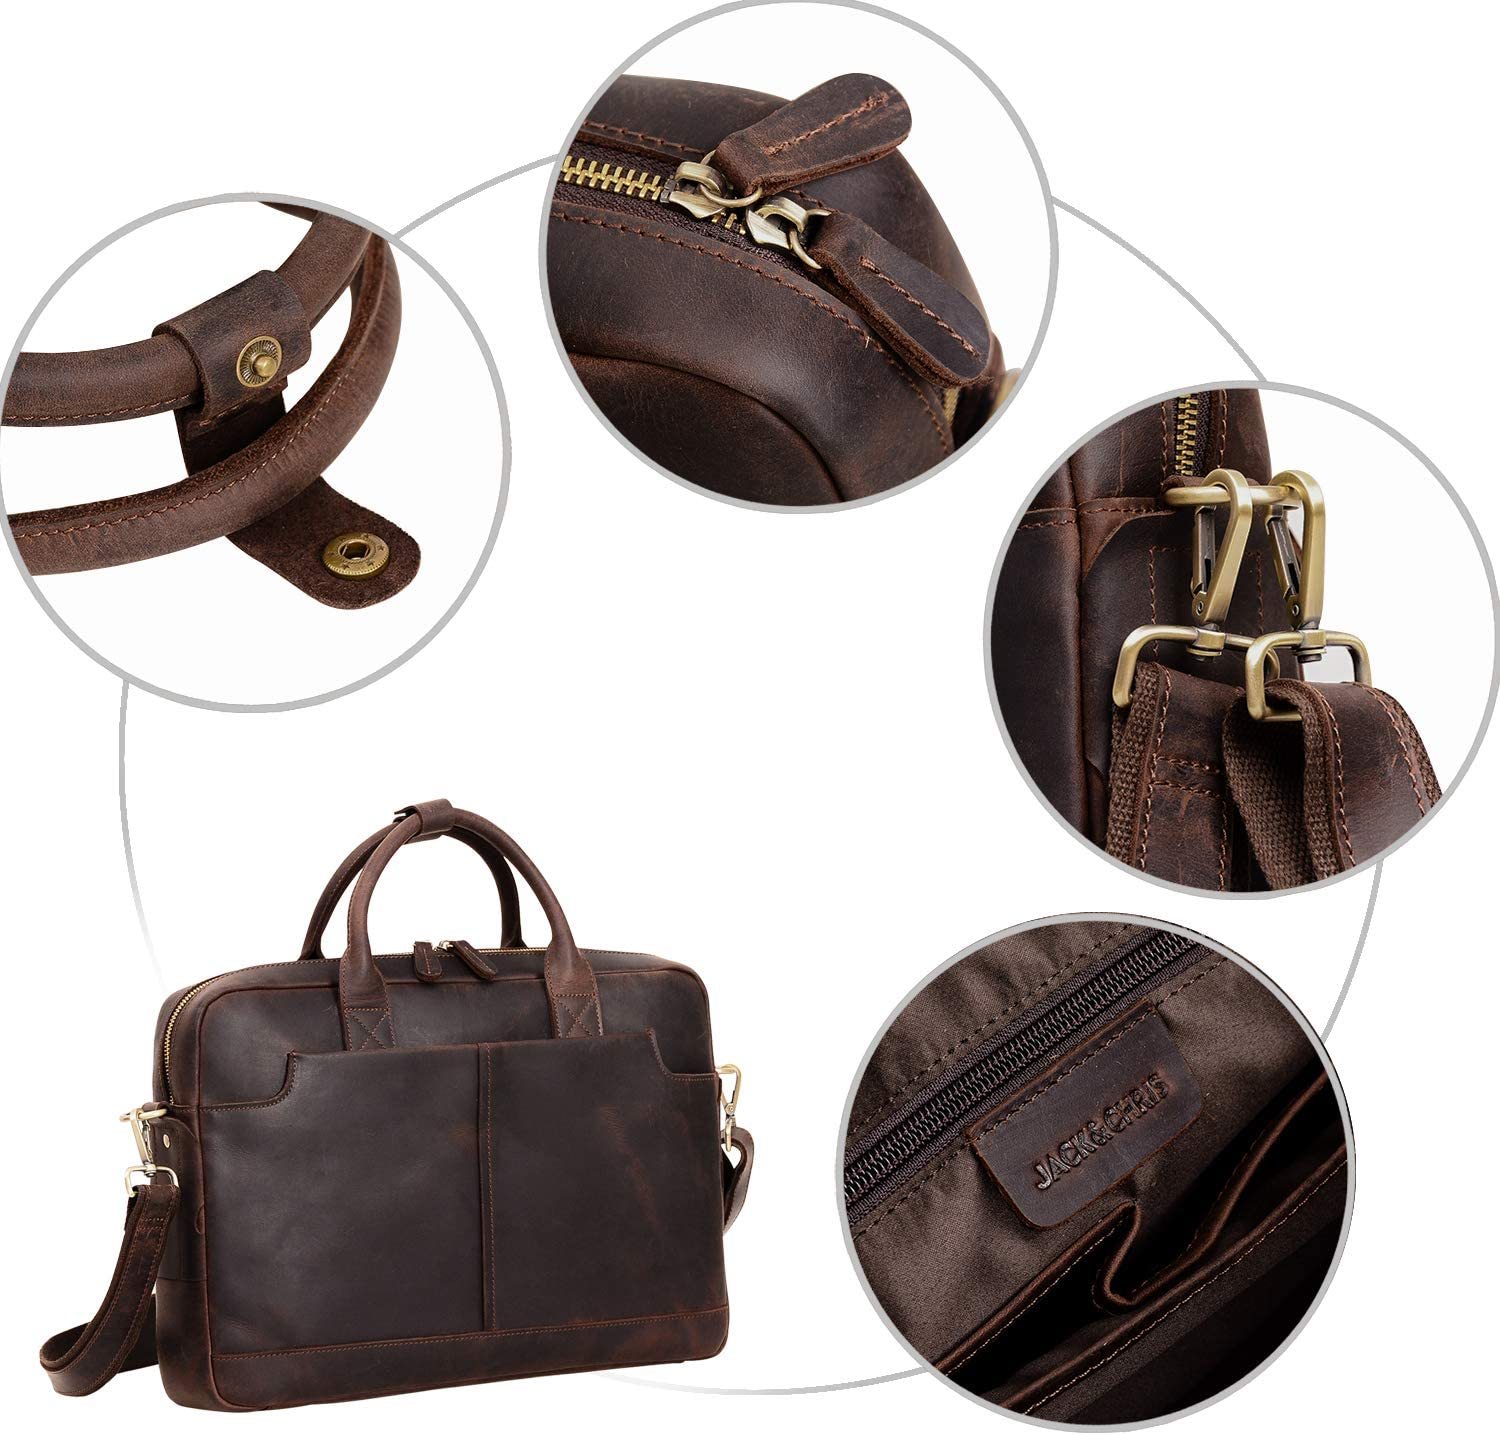 Professional Leather Briefcase Messenger Bag 14 inch Laptop Bag for Men - Laptop Cases & Bags